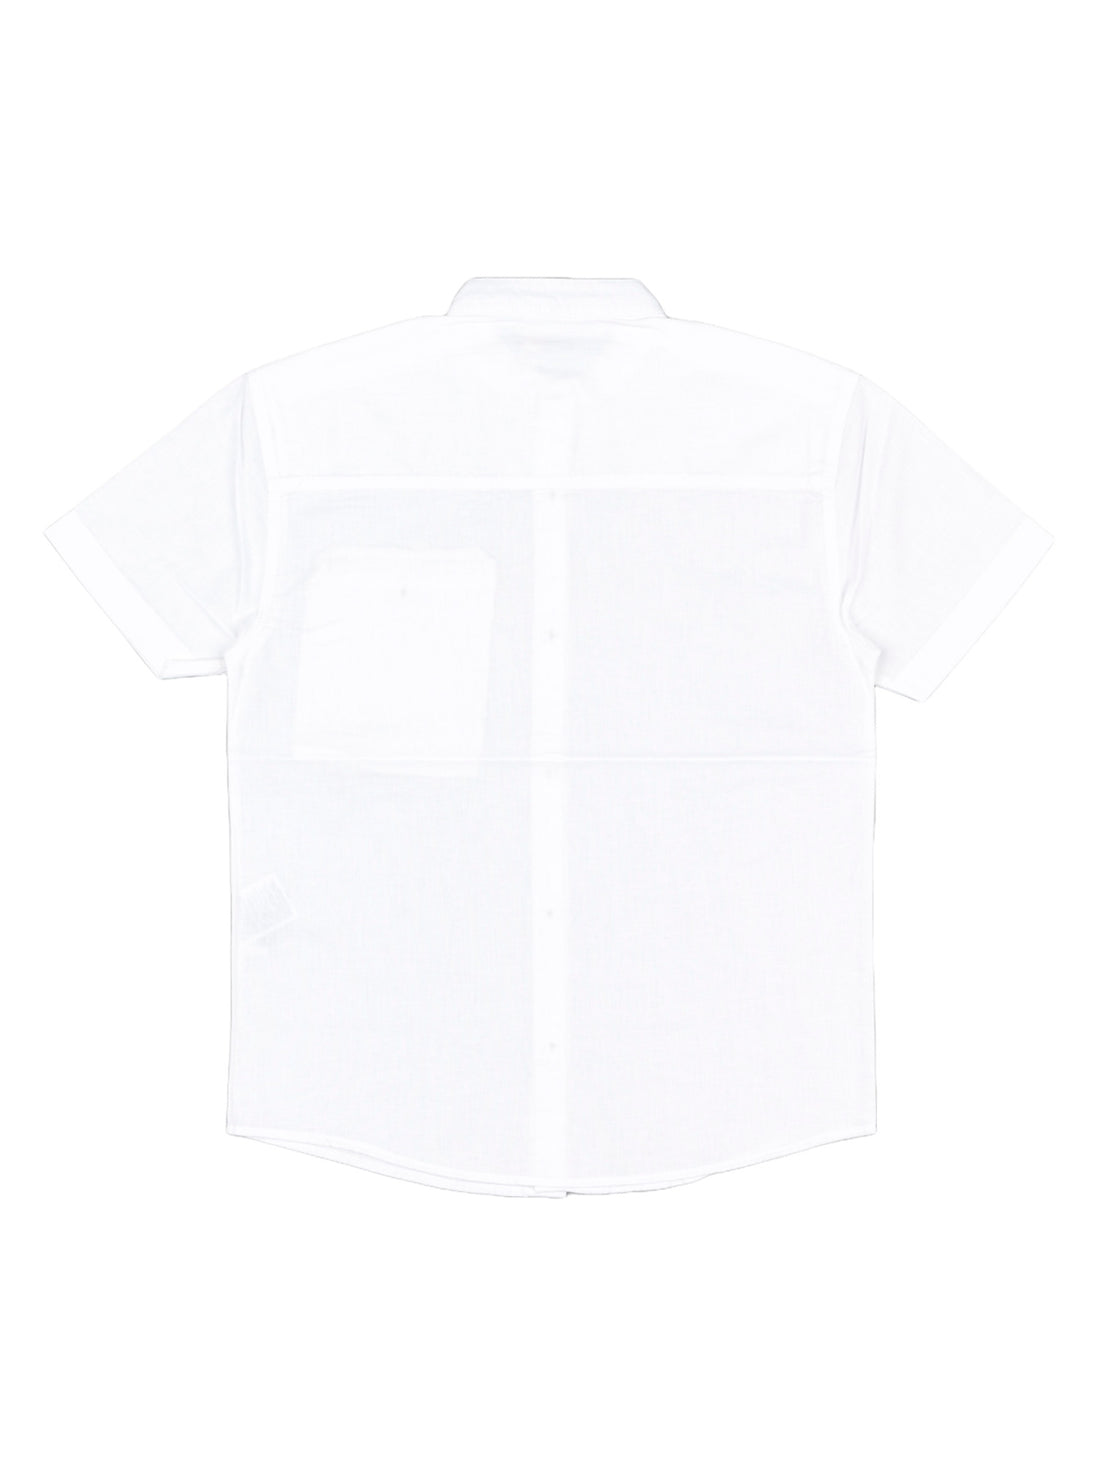 Camicie Bianco Losan